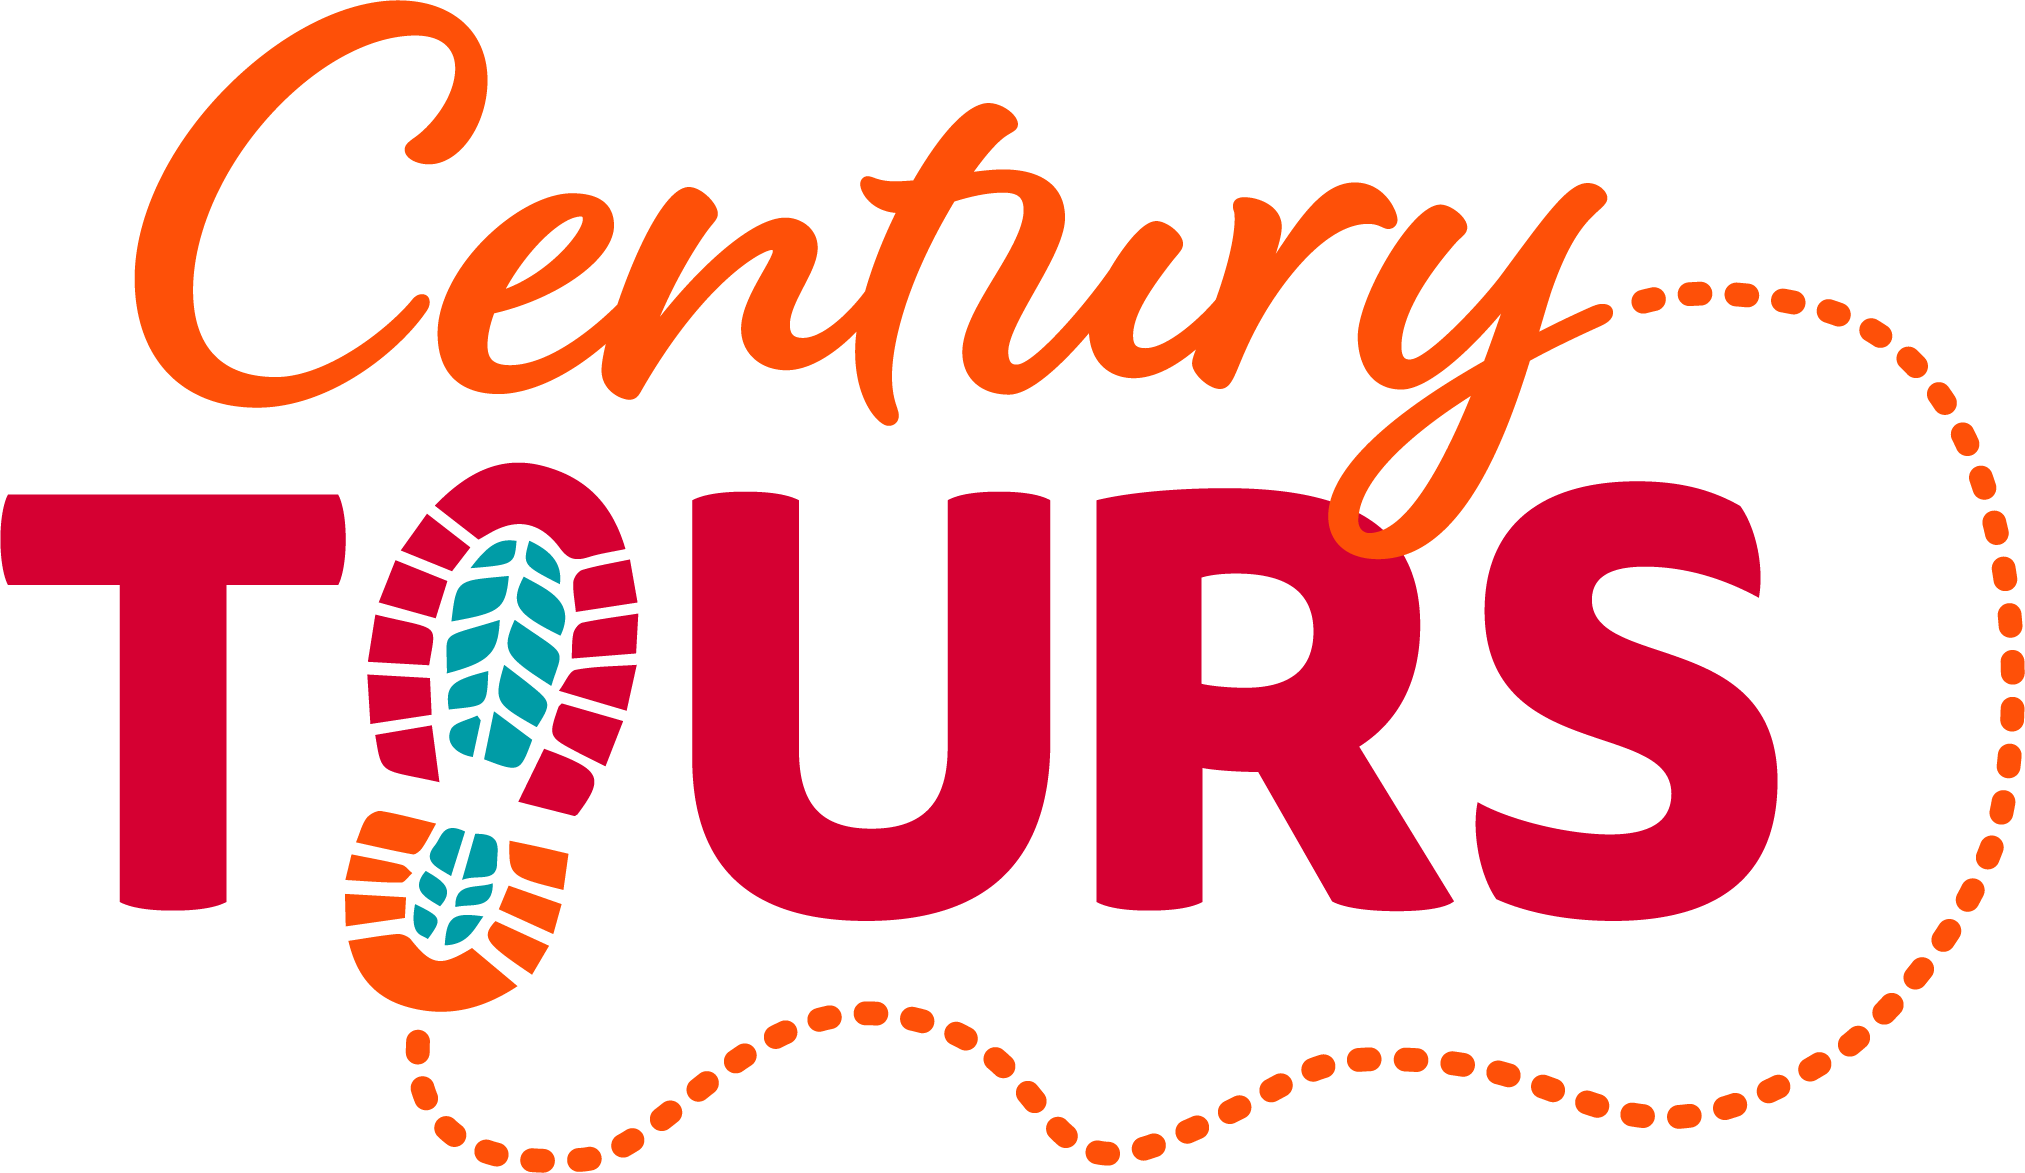 Century Tours